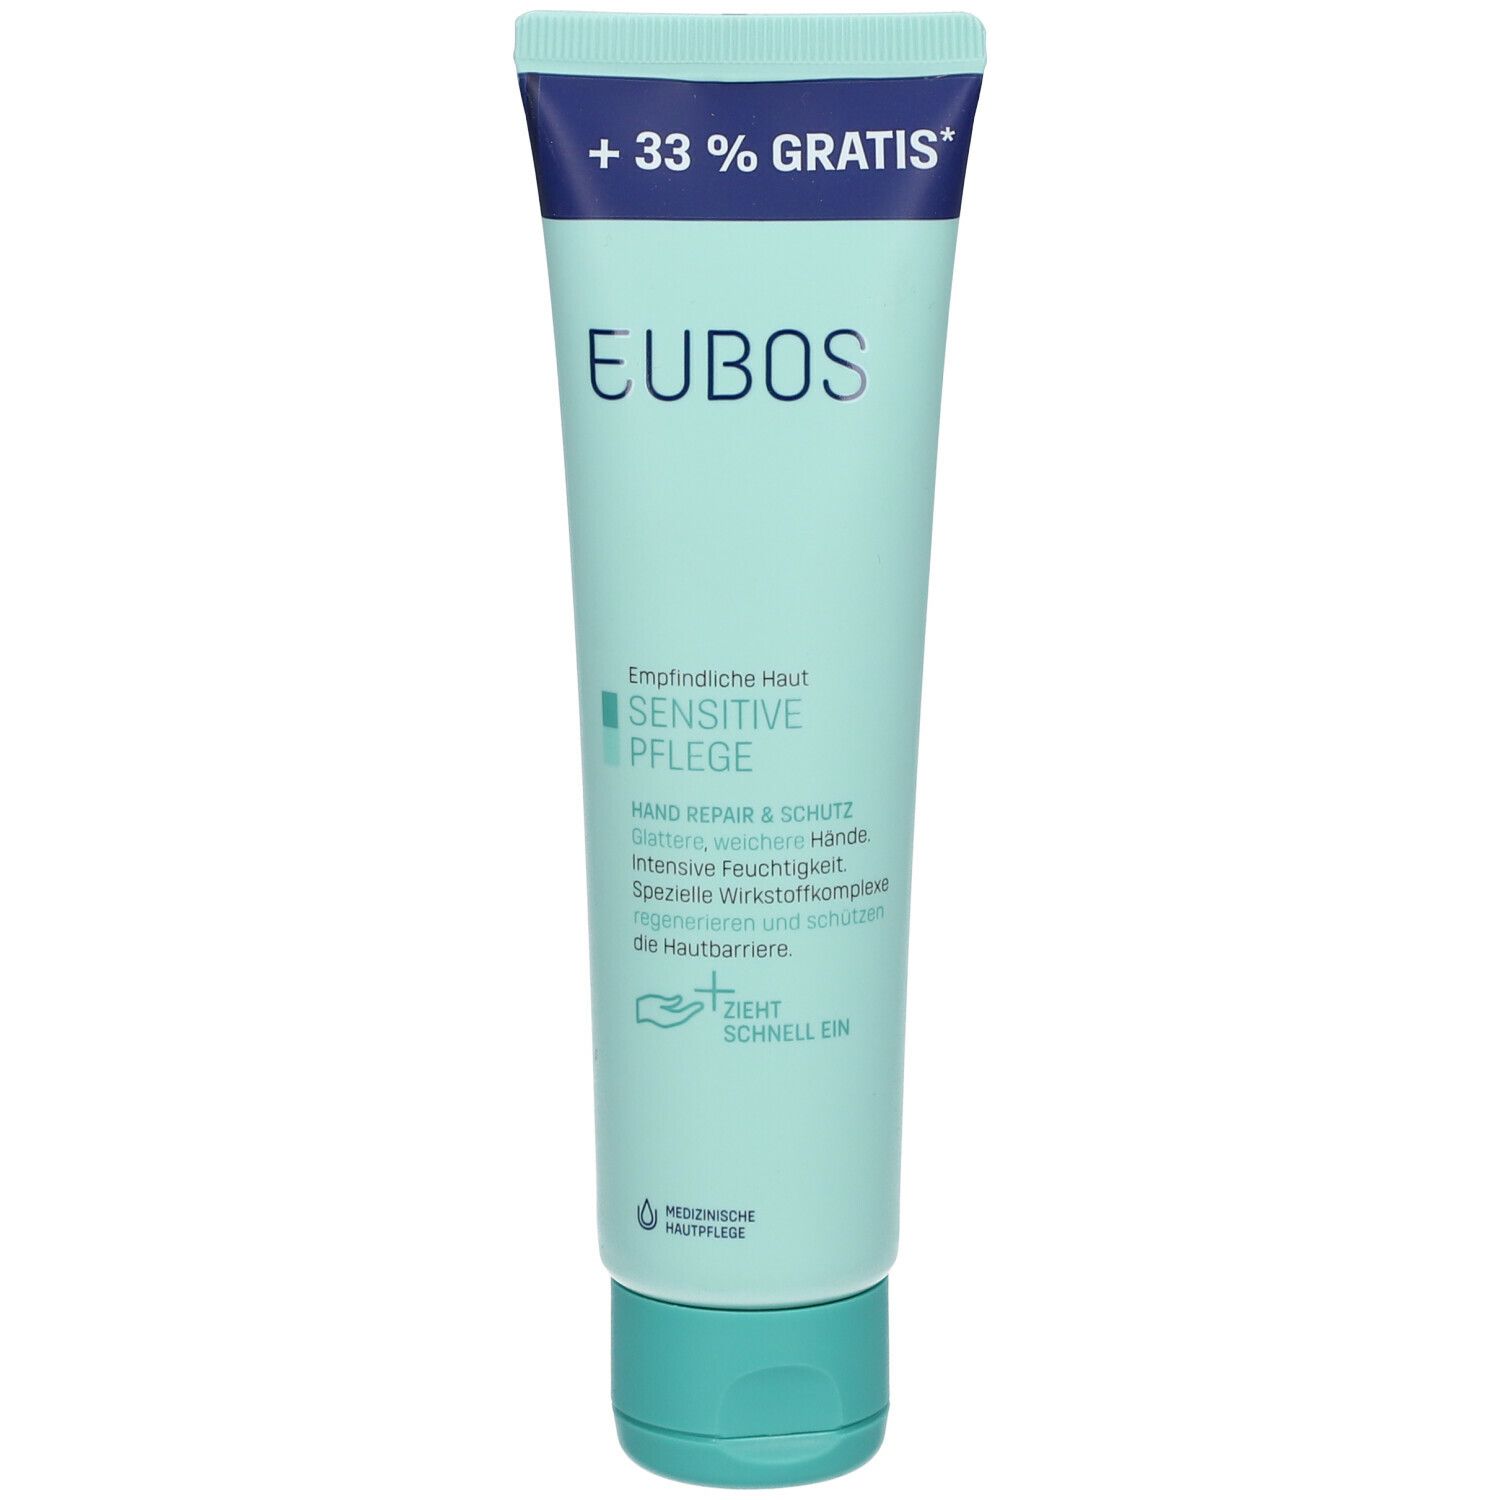 EUBOS® Sensitive Hand Repair & Schutz Creme